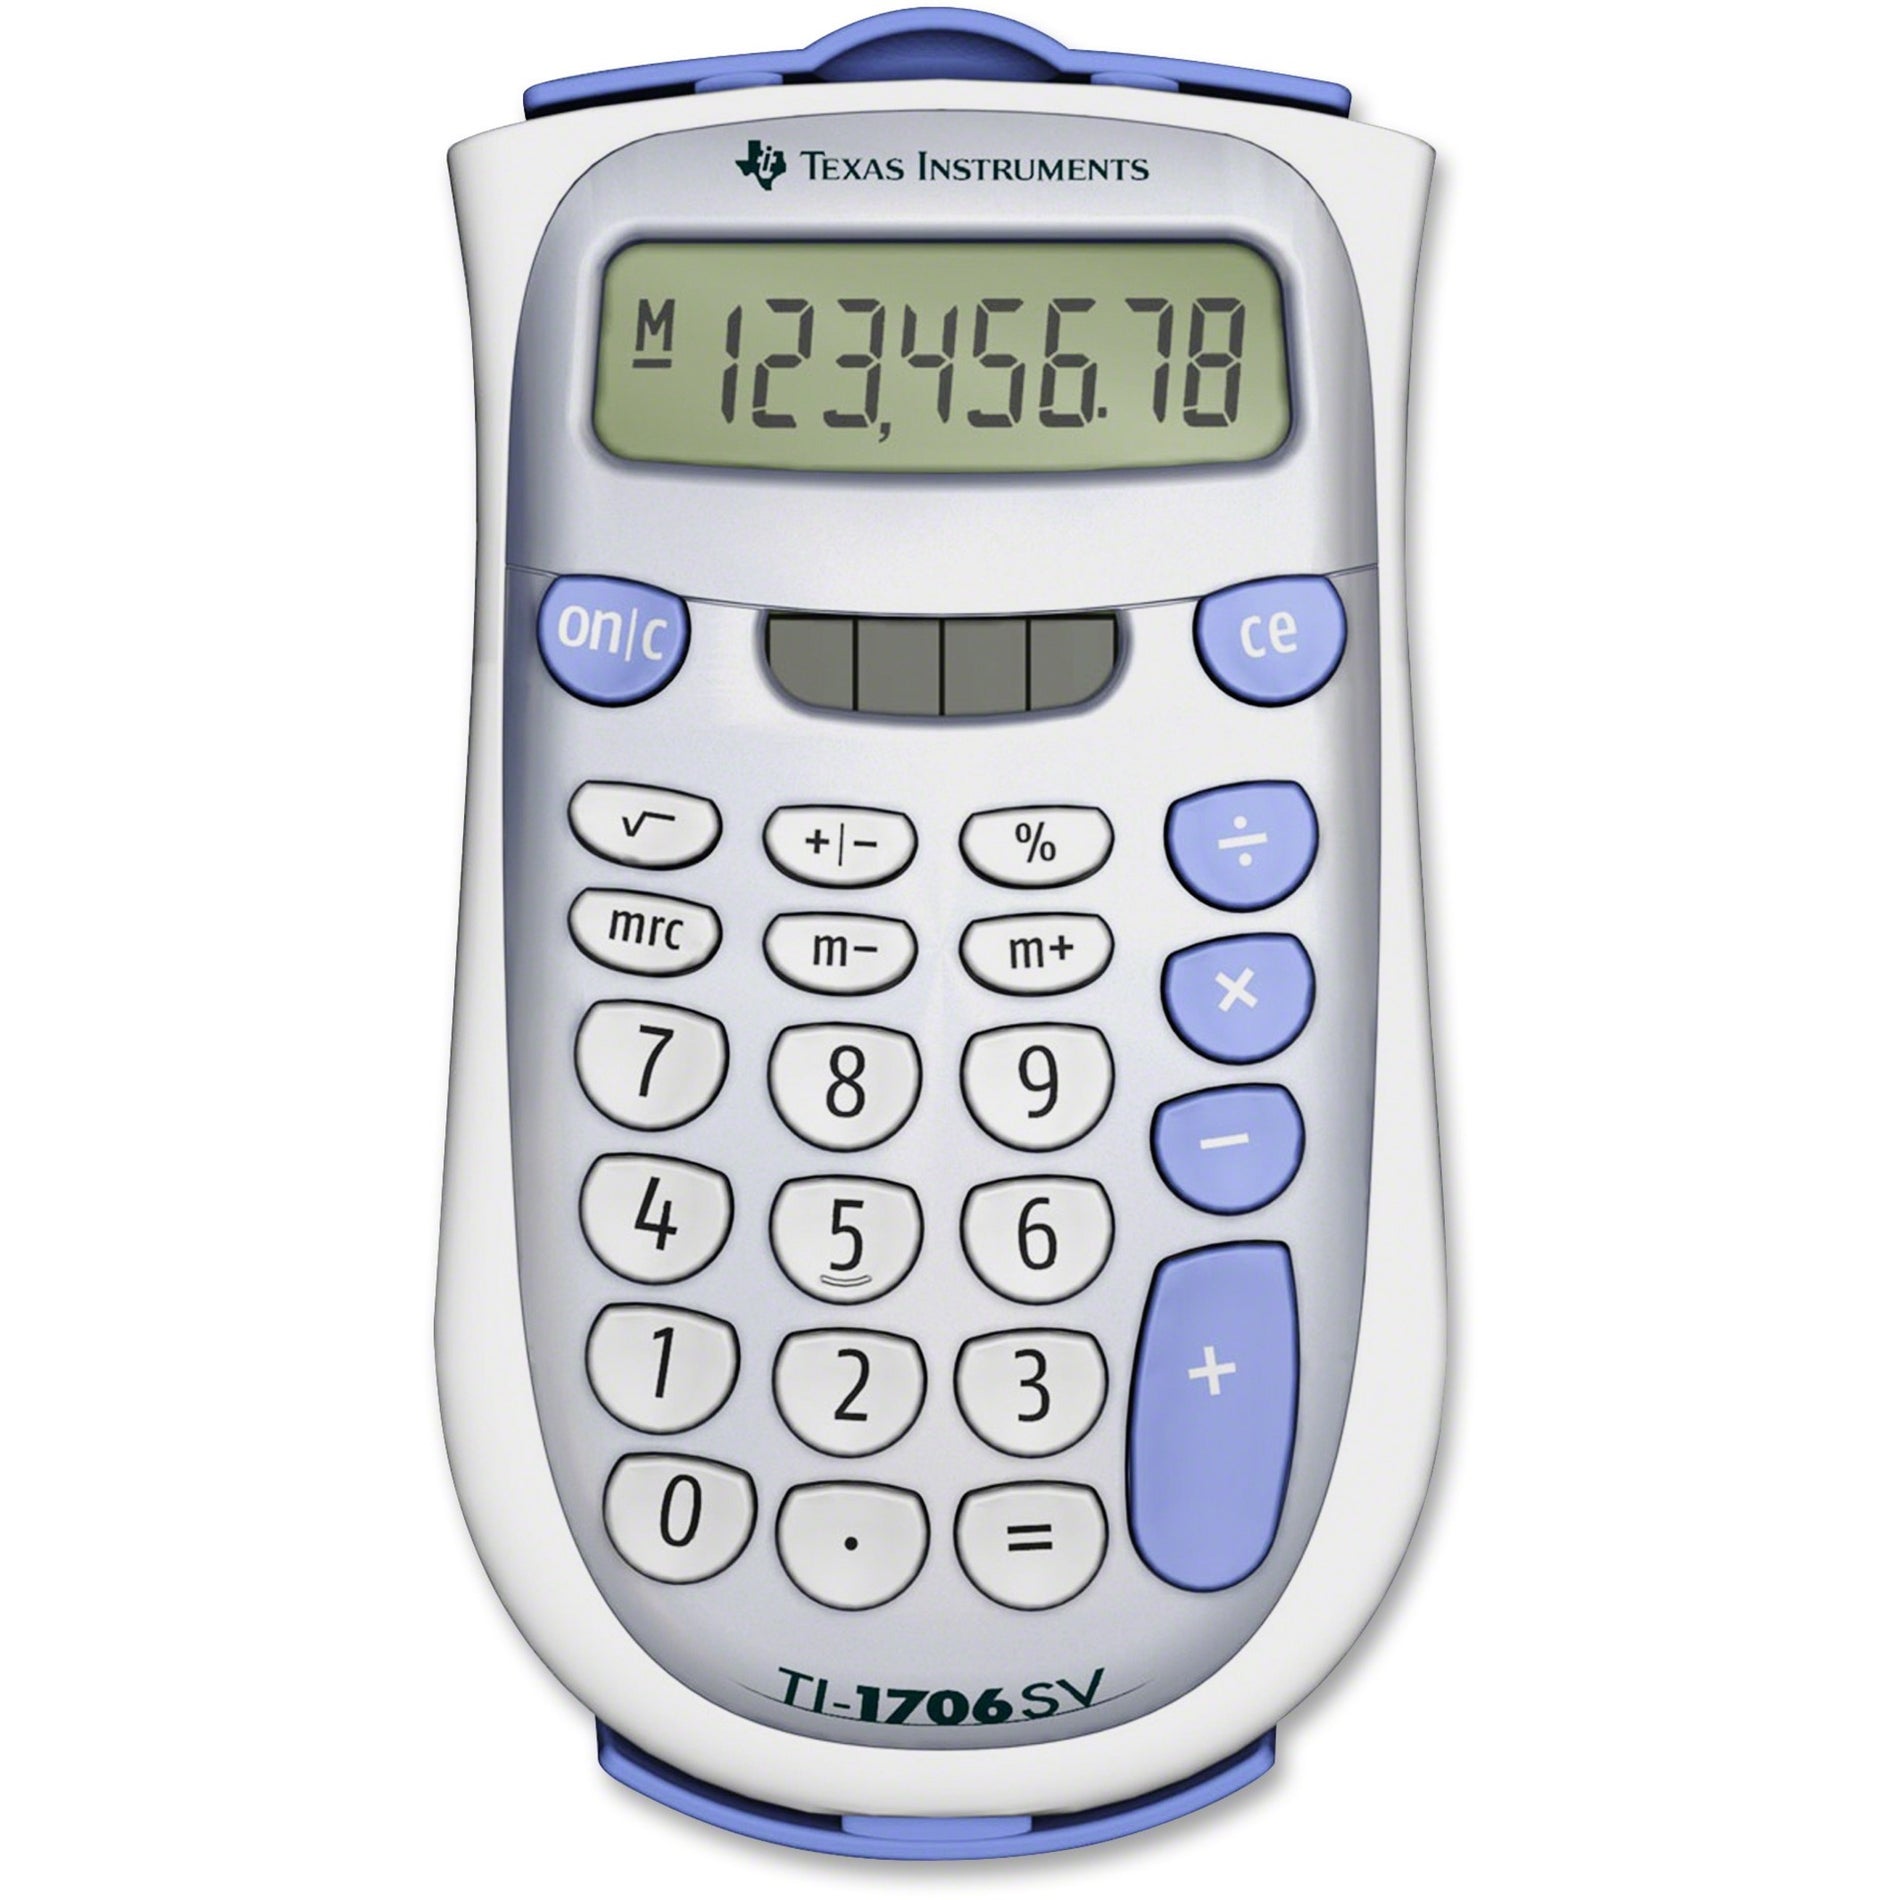 Texas Instruments TI-1706SV TI1706 SuperView Handheld Calculator, Large Display, Dual Power